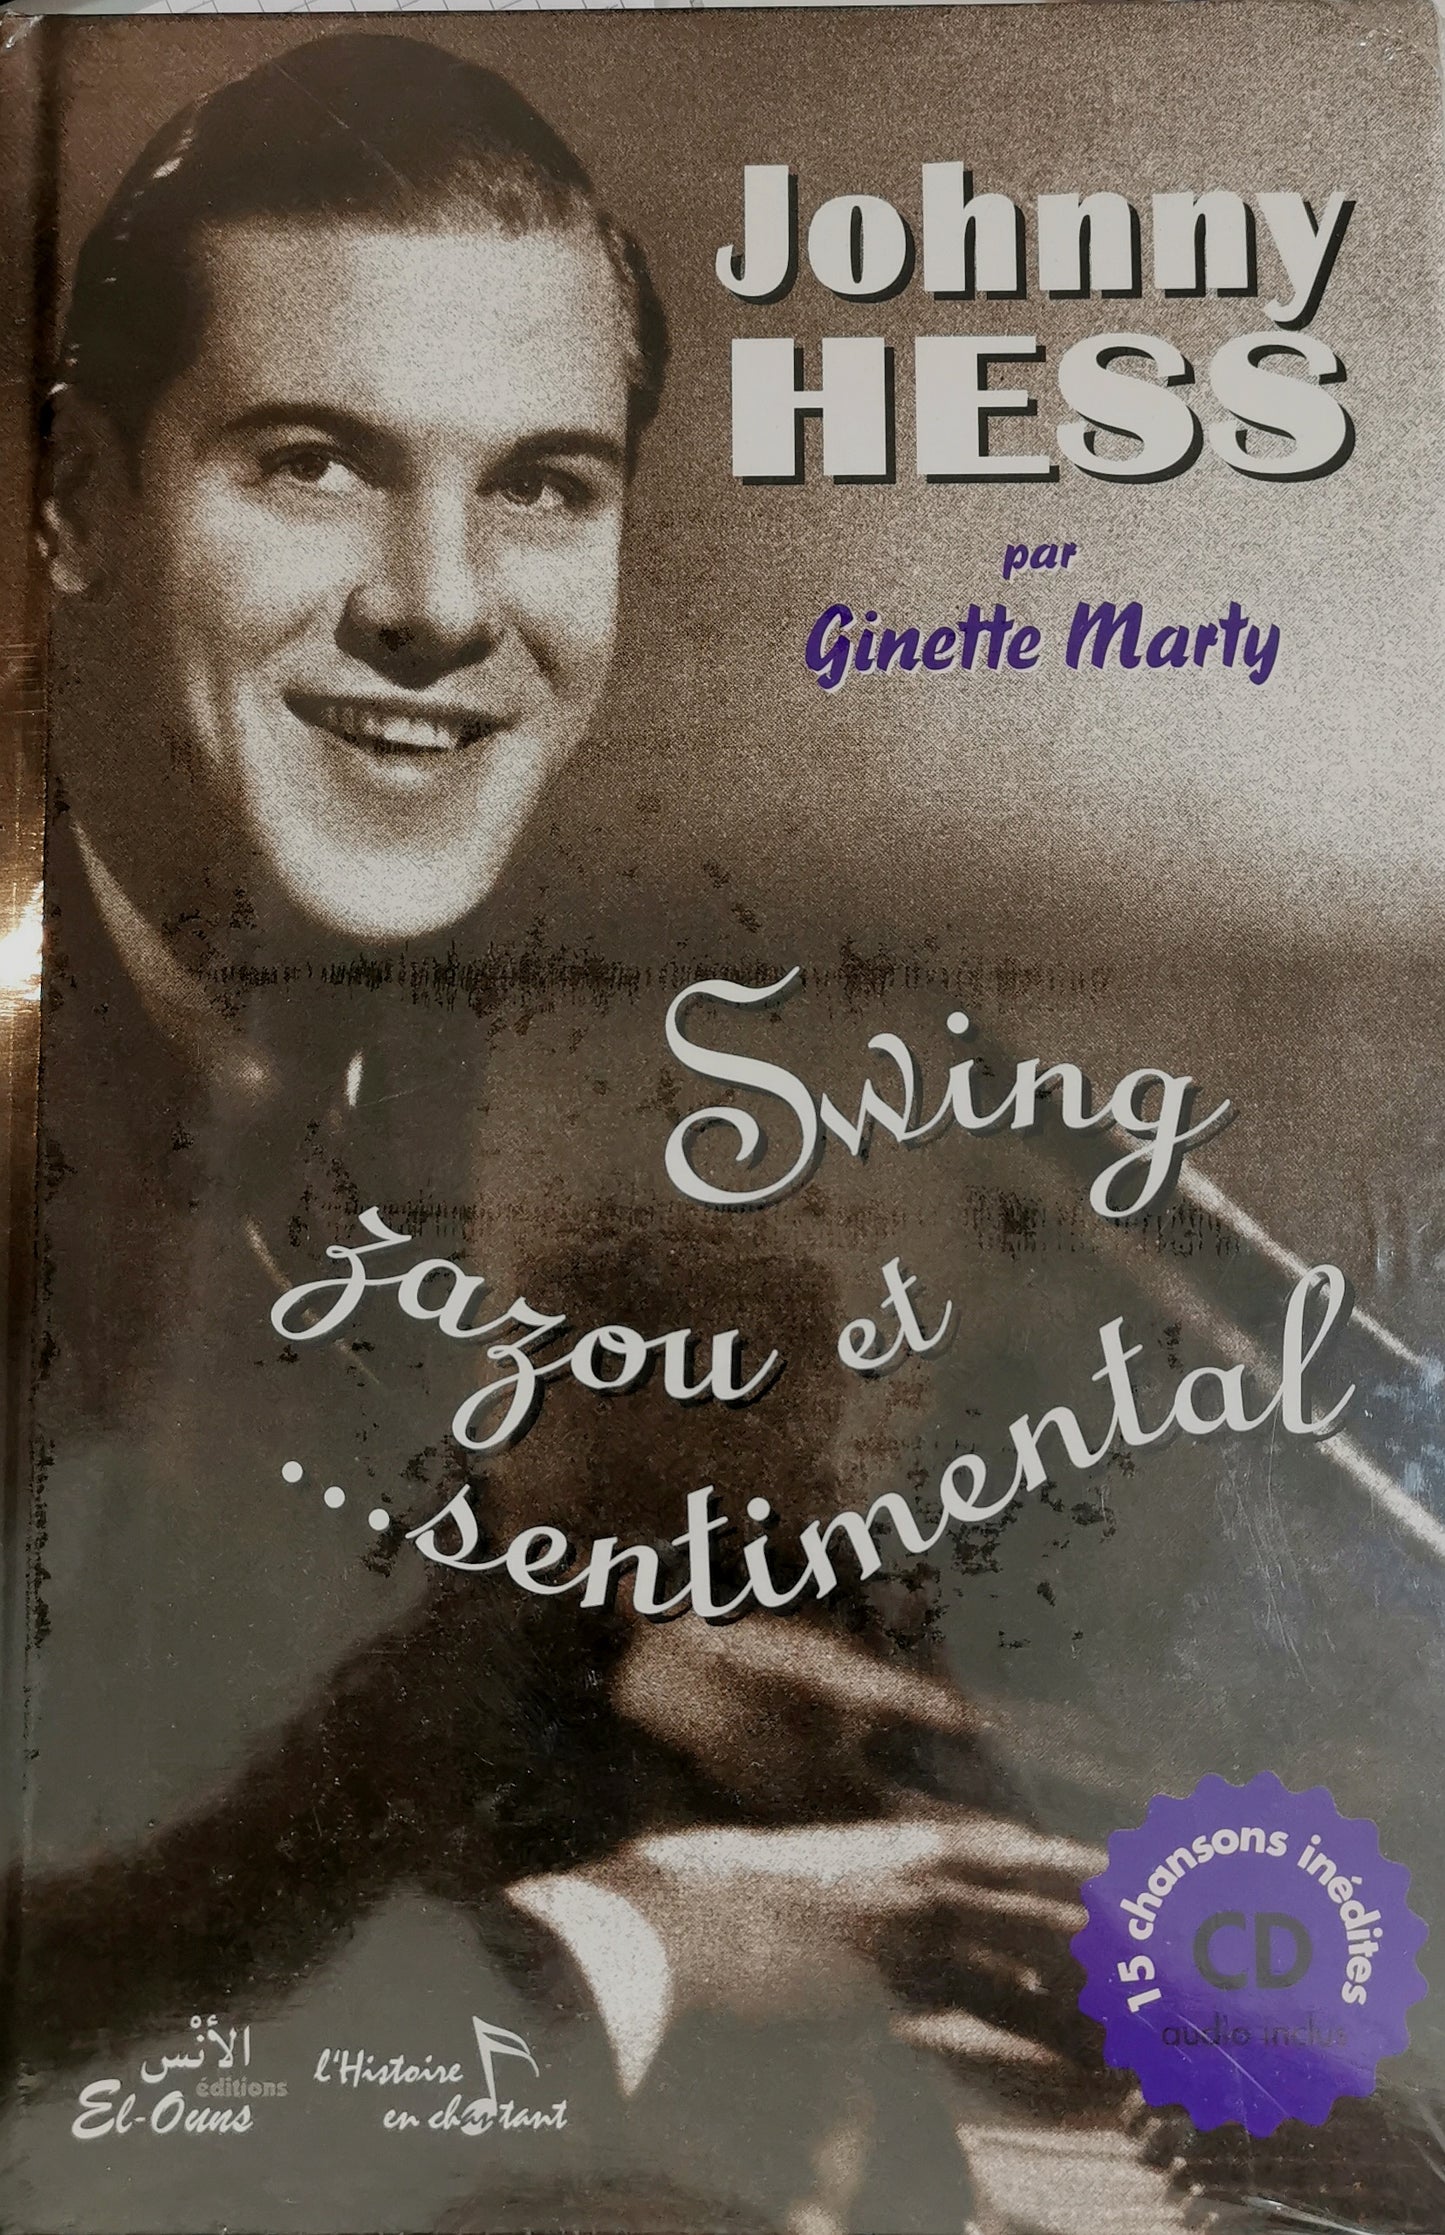 Johnny Hess, Swing, zazou et... sentimental, Ginette Marty, +CD, ed. El-Ouns, 1997.